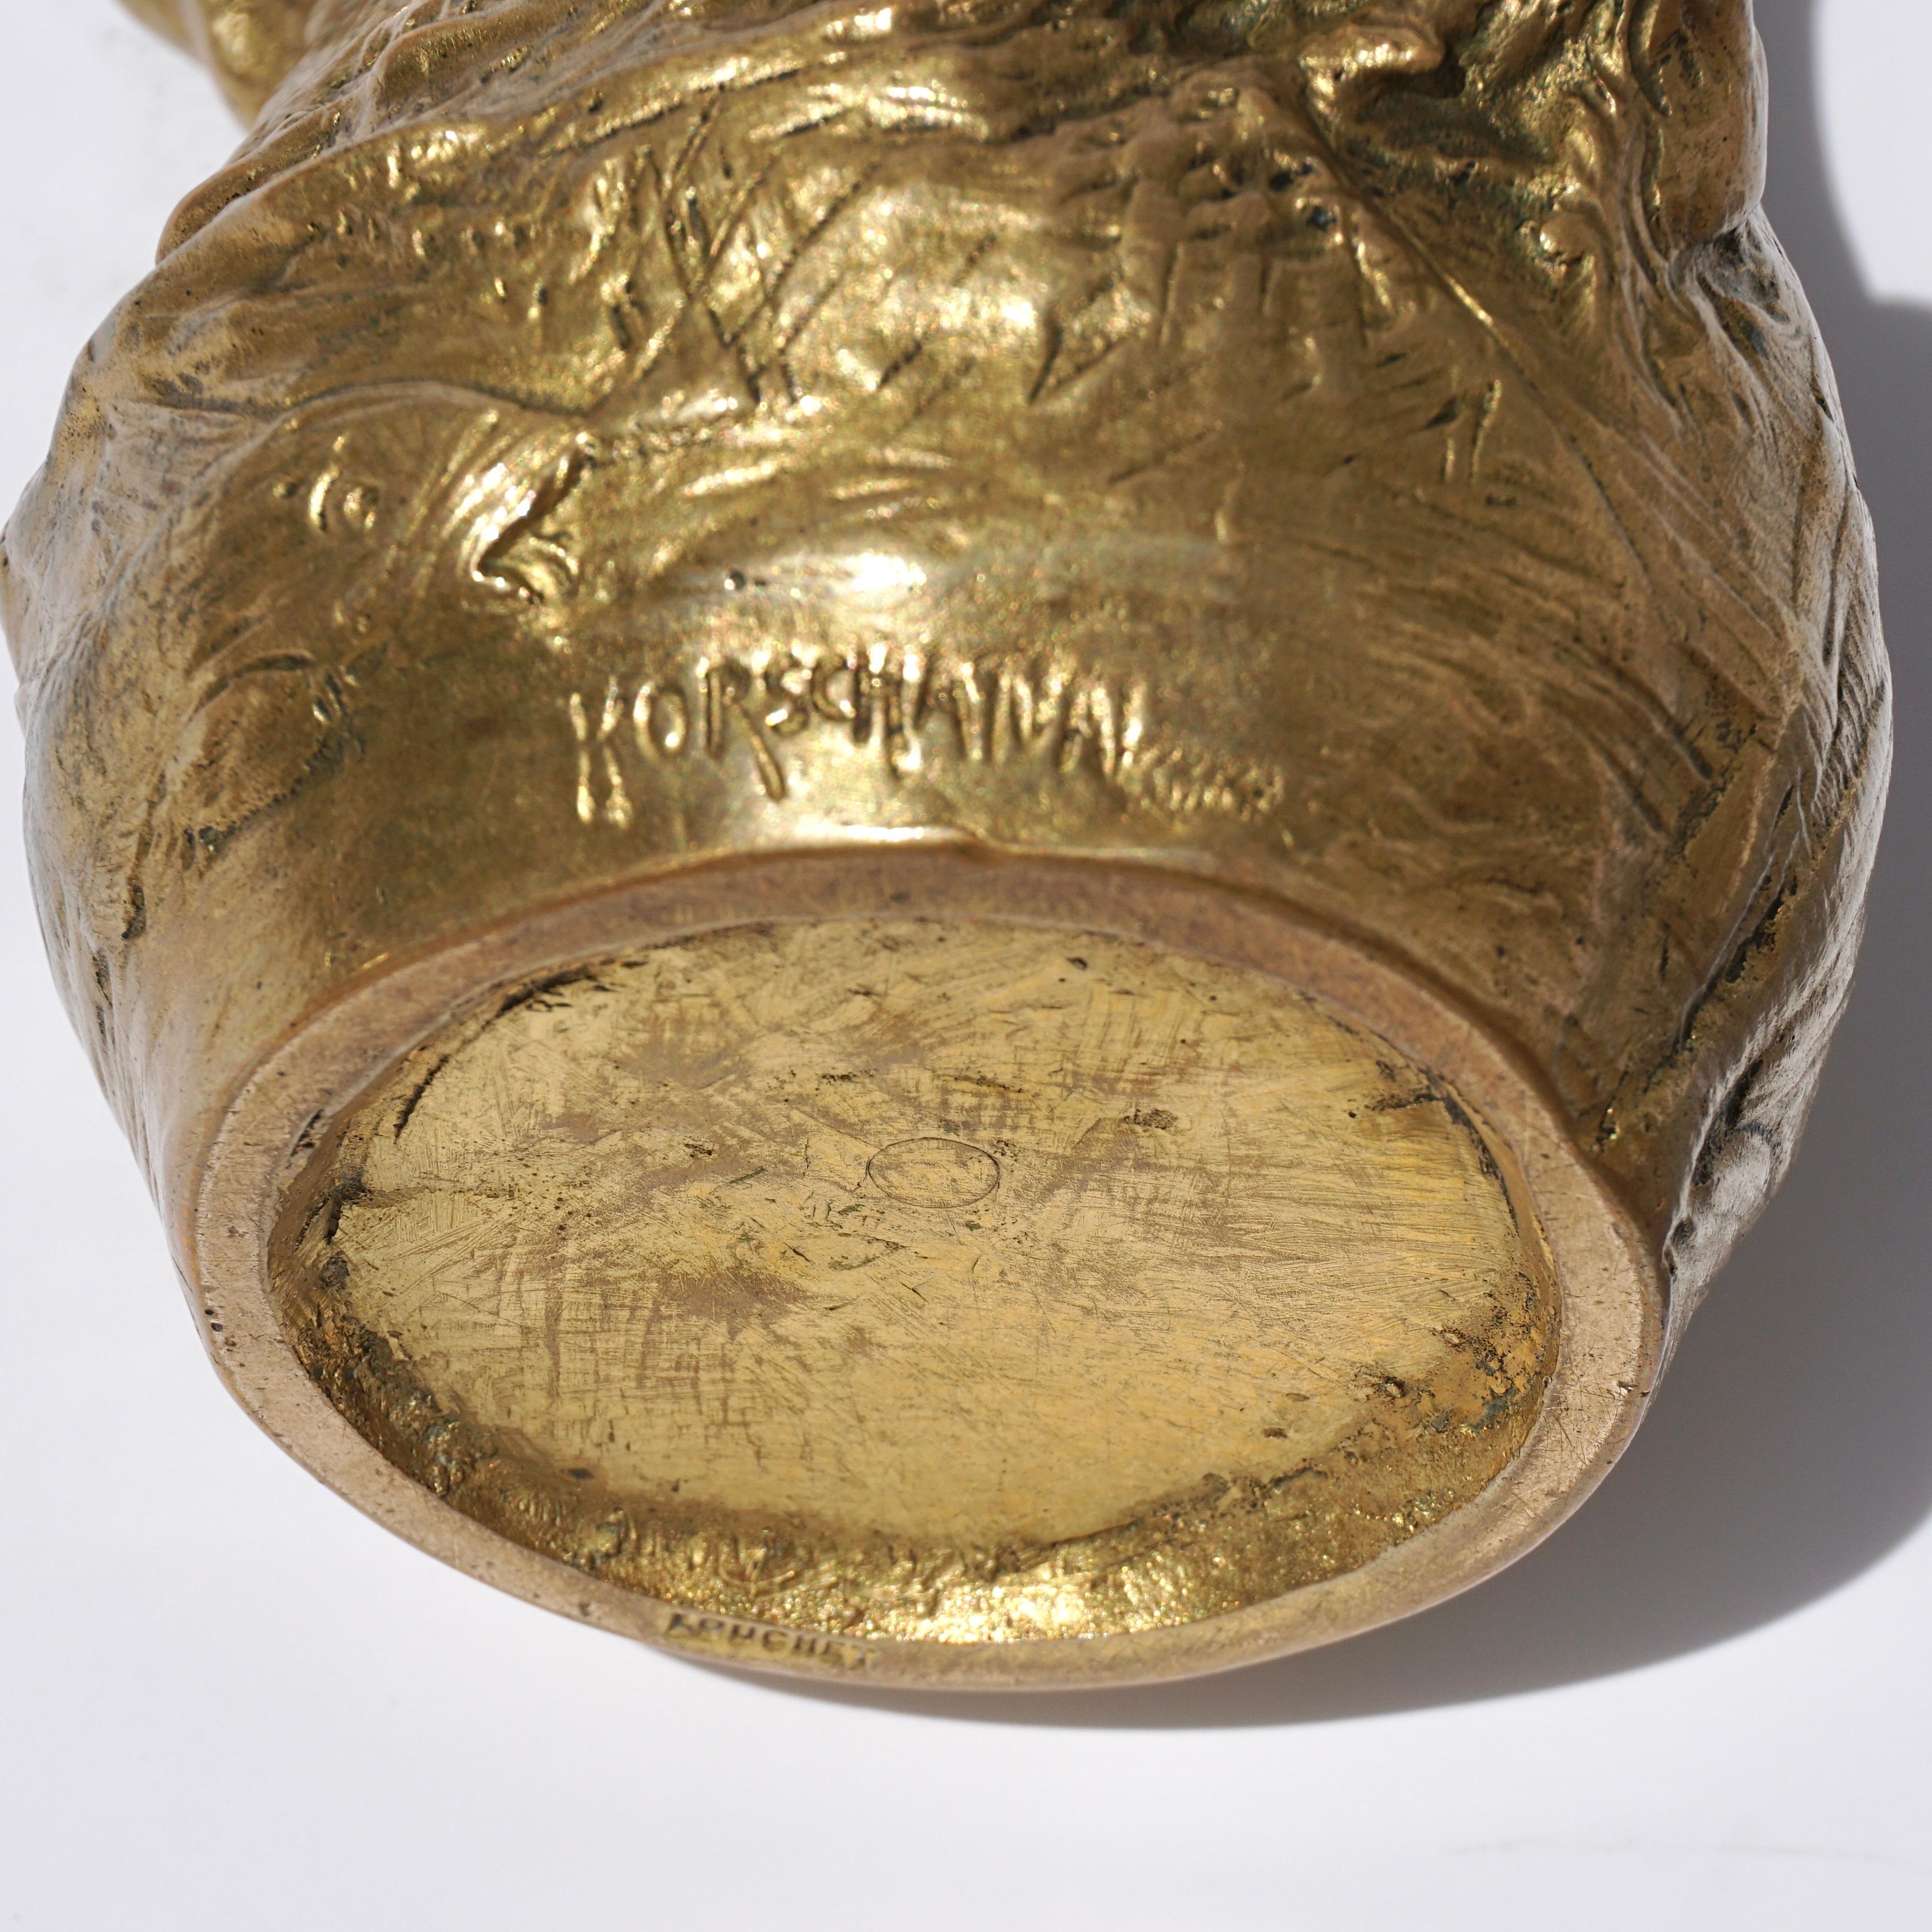 Charles Korschann Jugendstil-Akt aus vergoldeter Bronze (Spätes 19. Jahrhundert) im Angebot